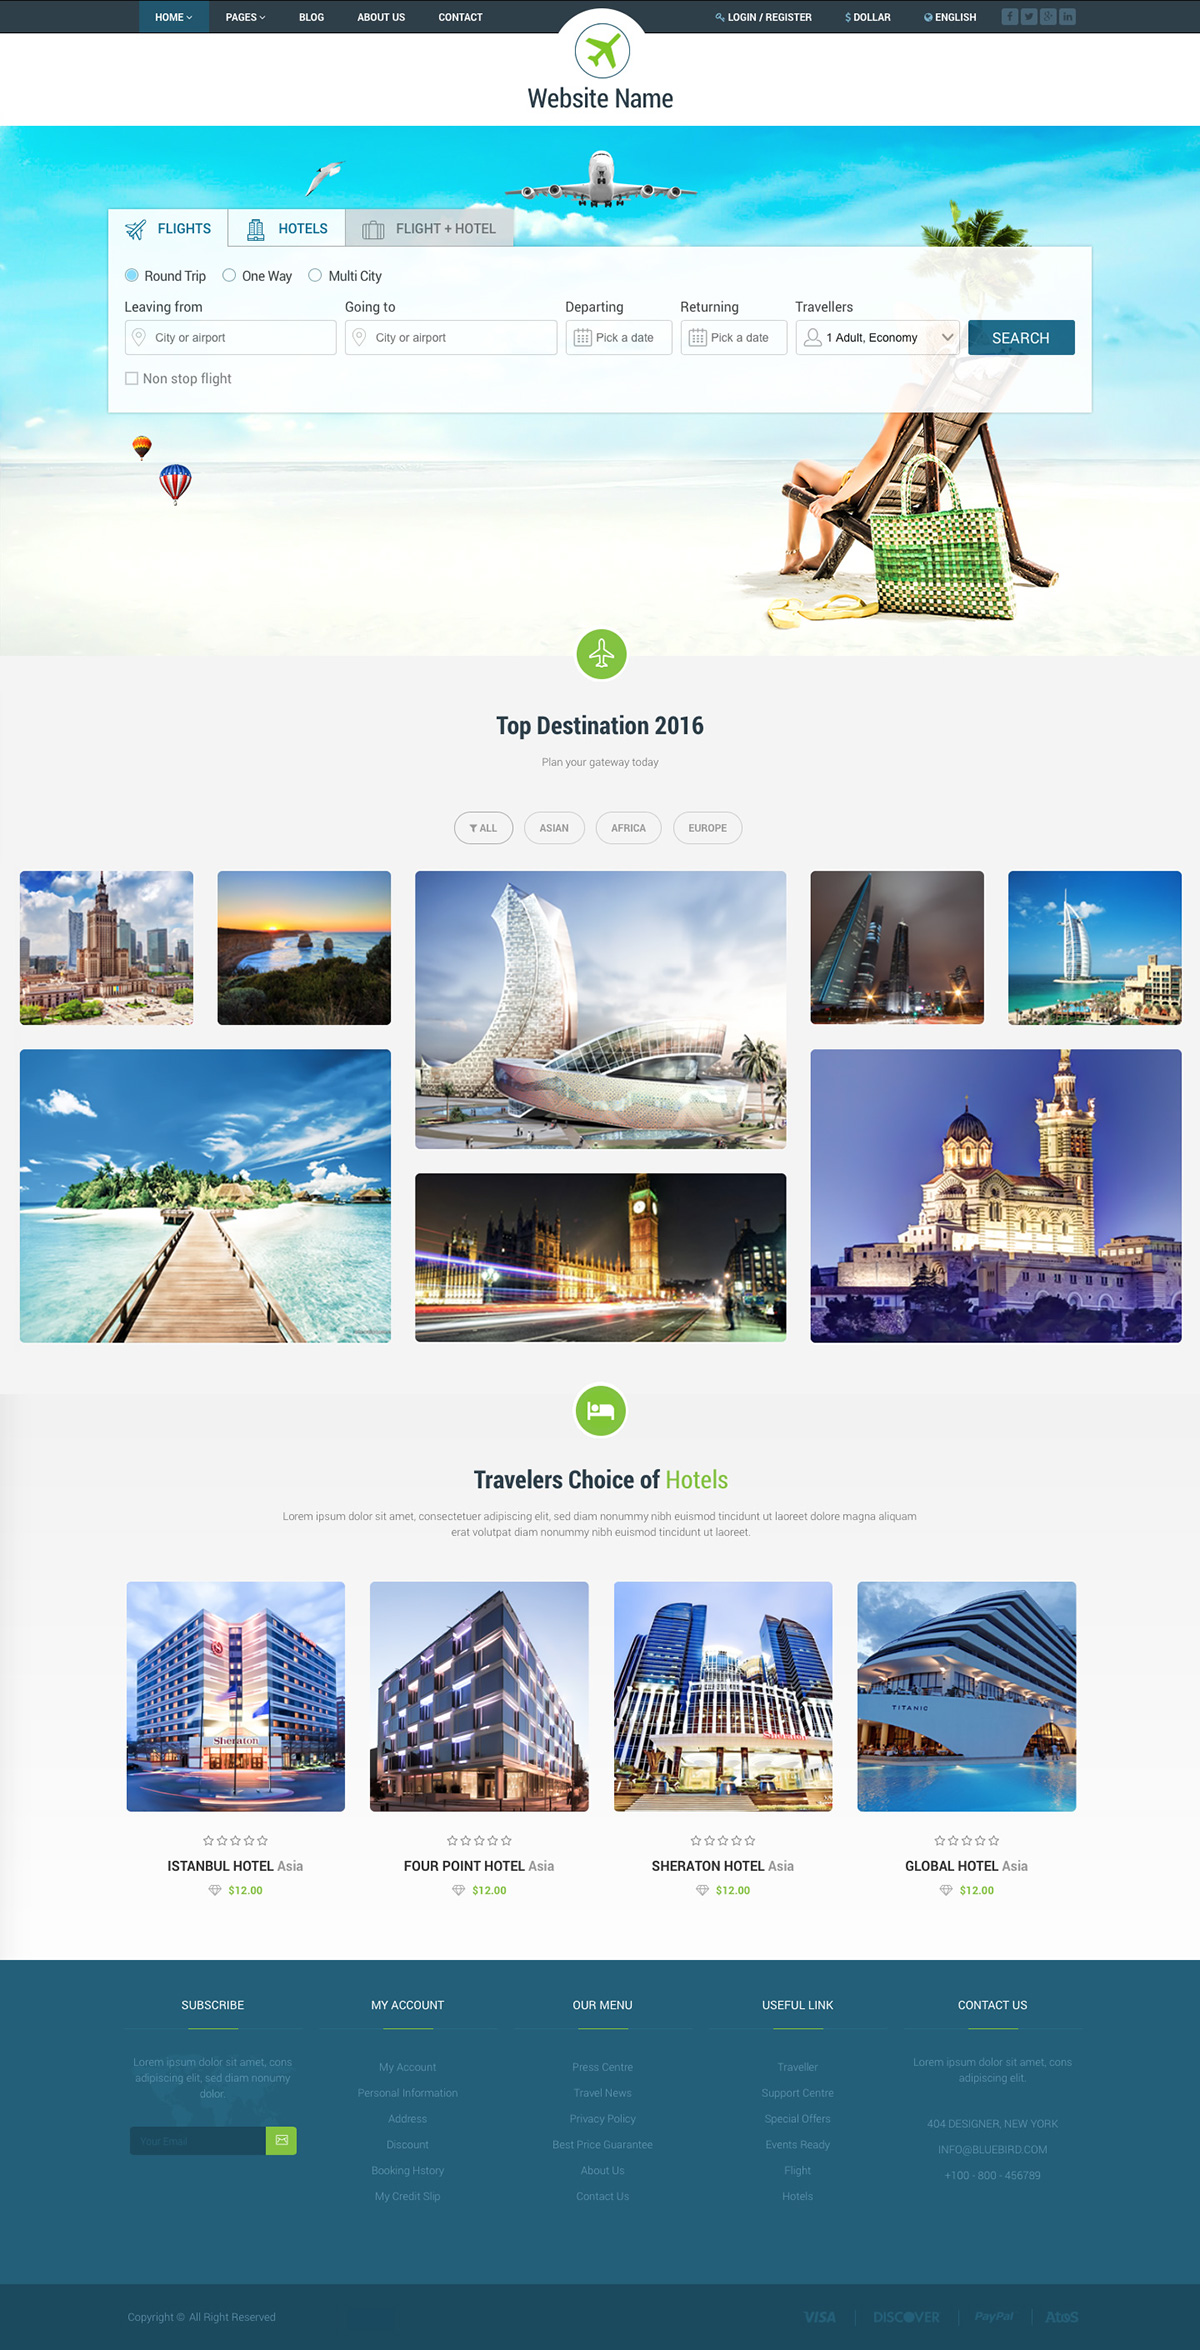 travel websites for flights and hotels